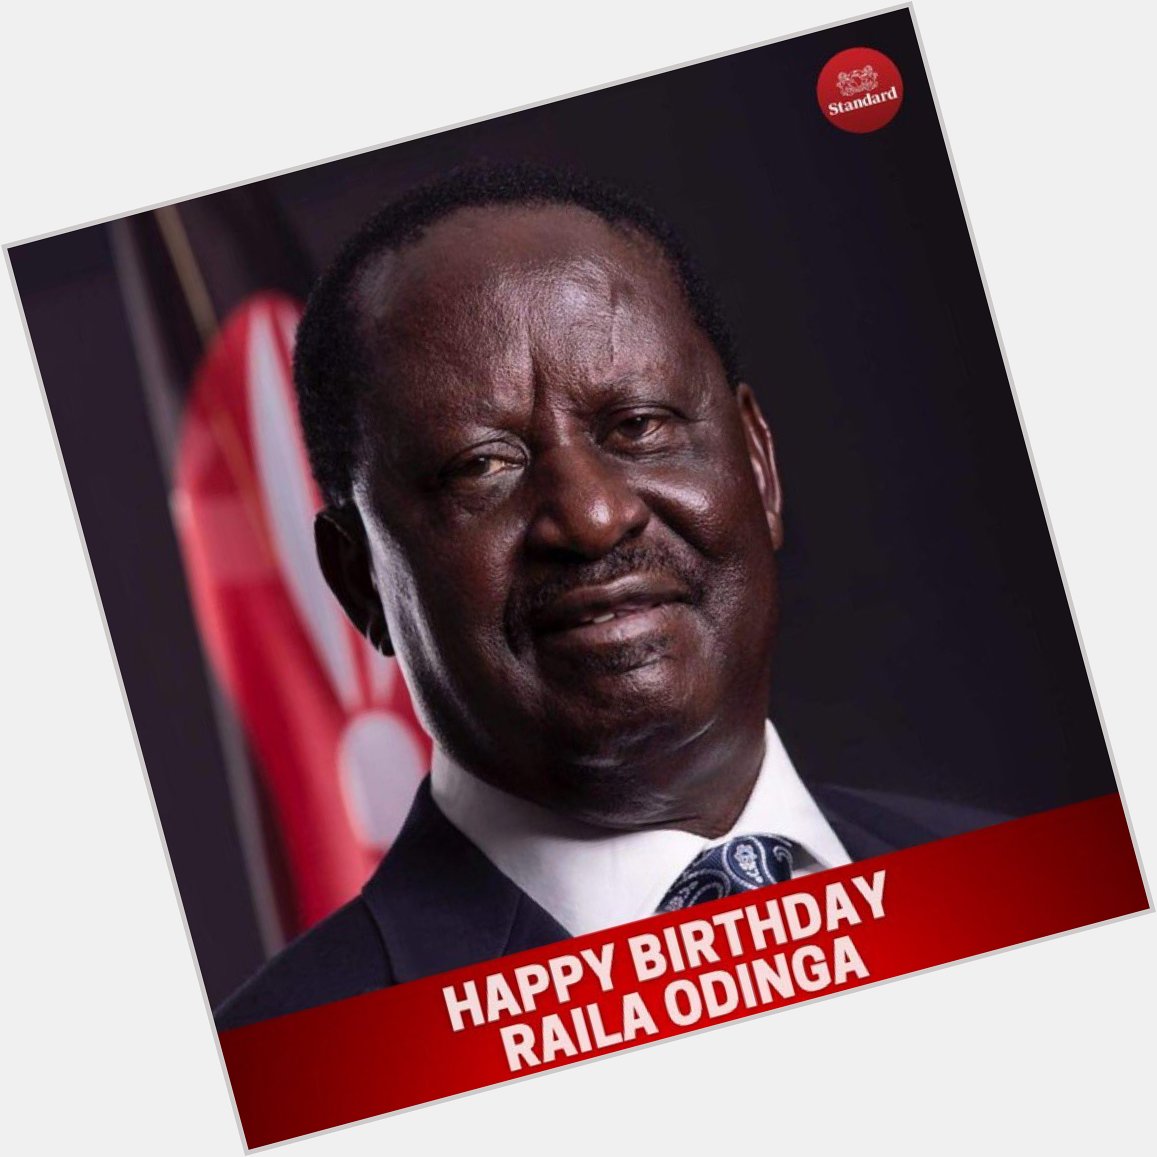 Happy Birthday Raila Odinga
January legends 
Jakom turns 77.  